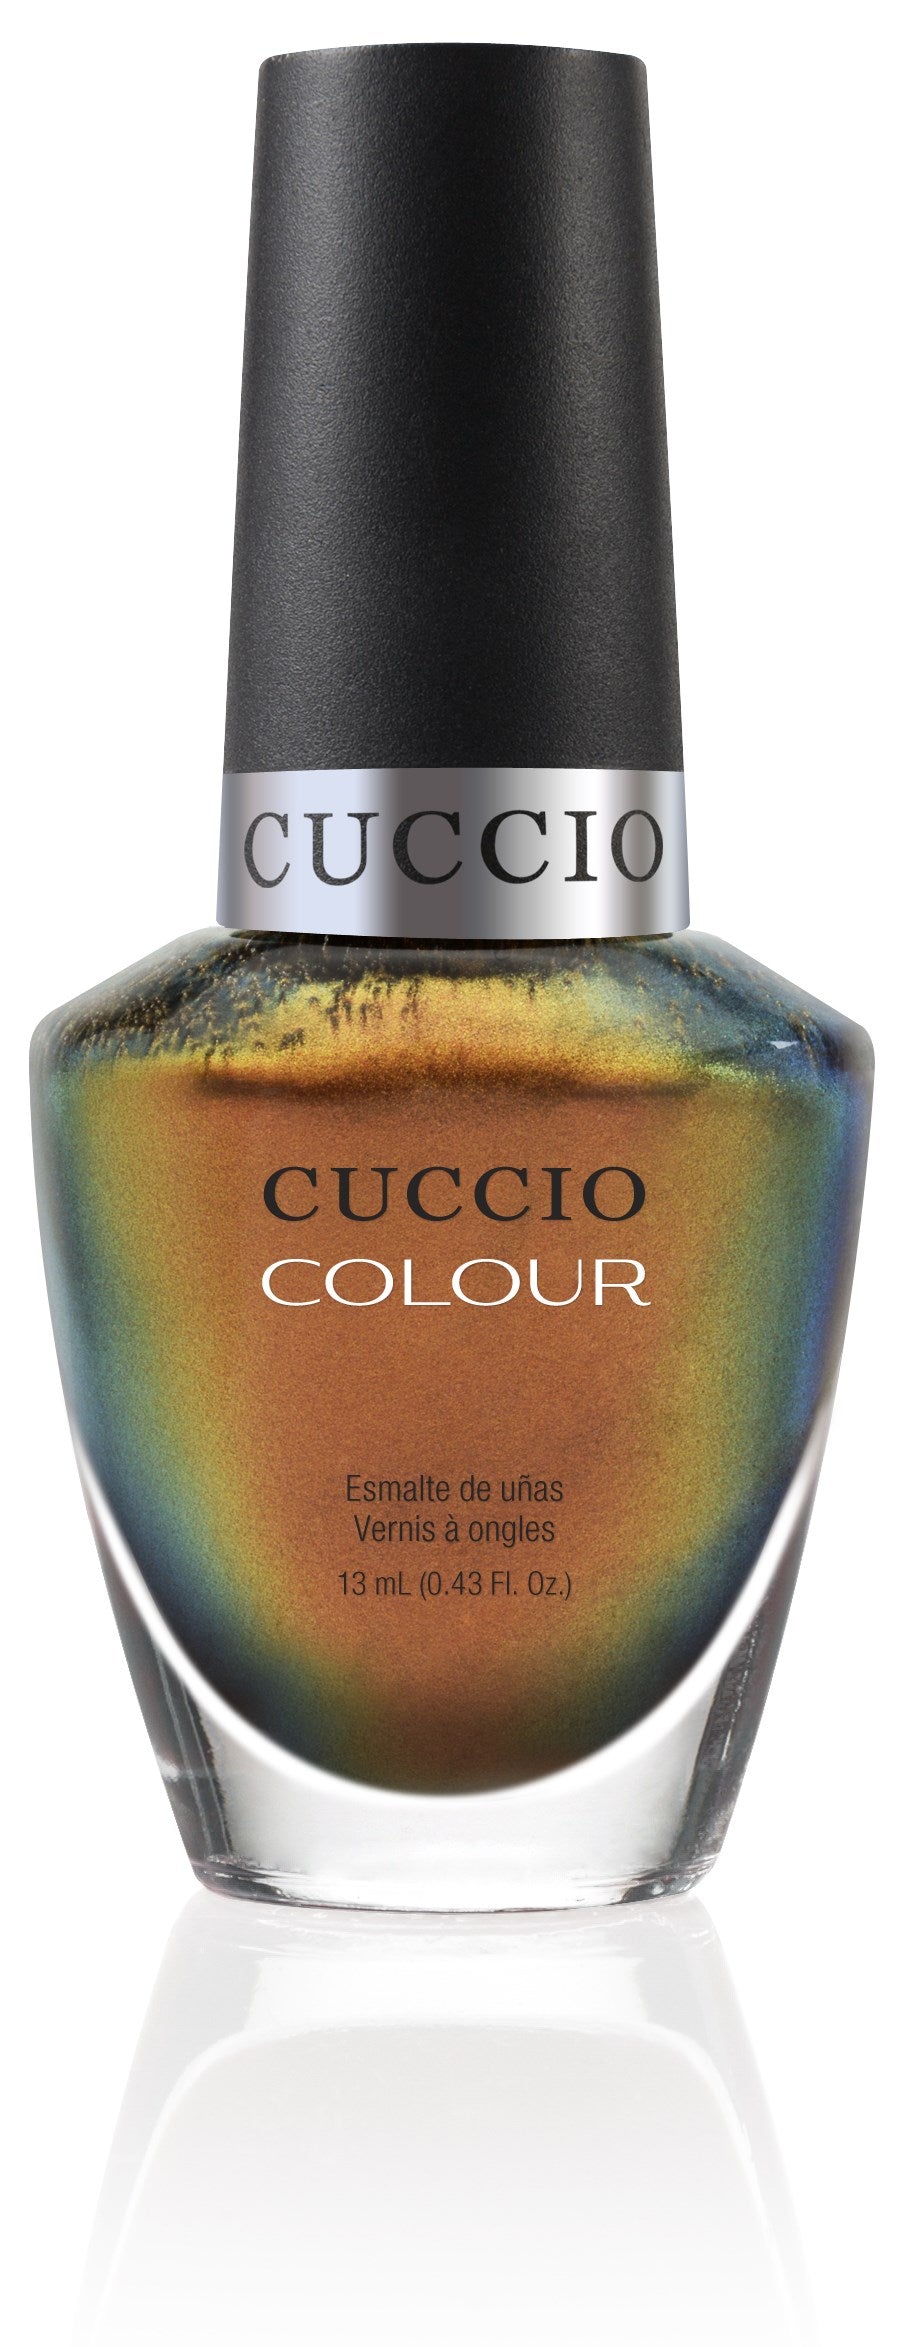 Cuccio Colour Crown Jewels Nail Laquer 13ml